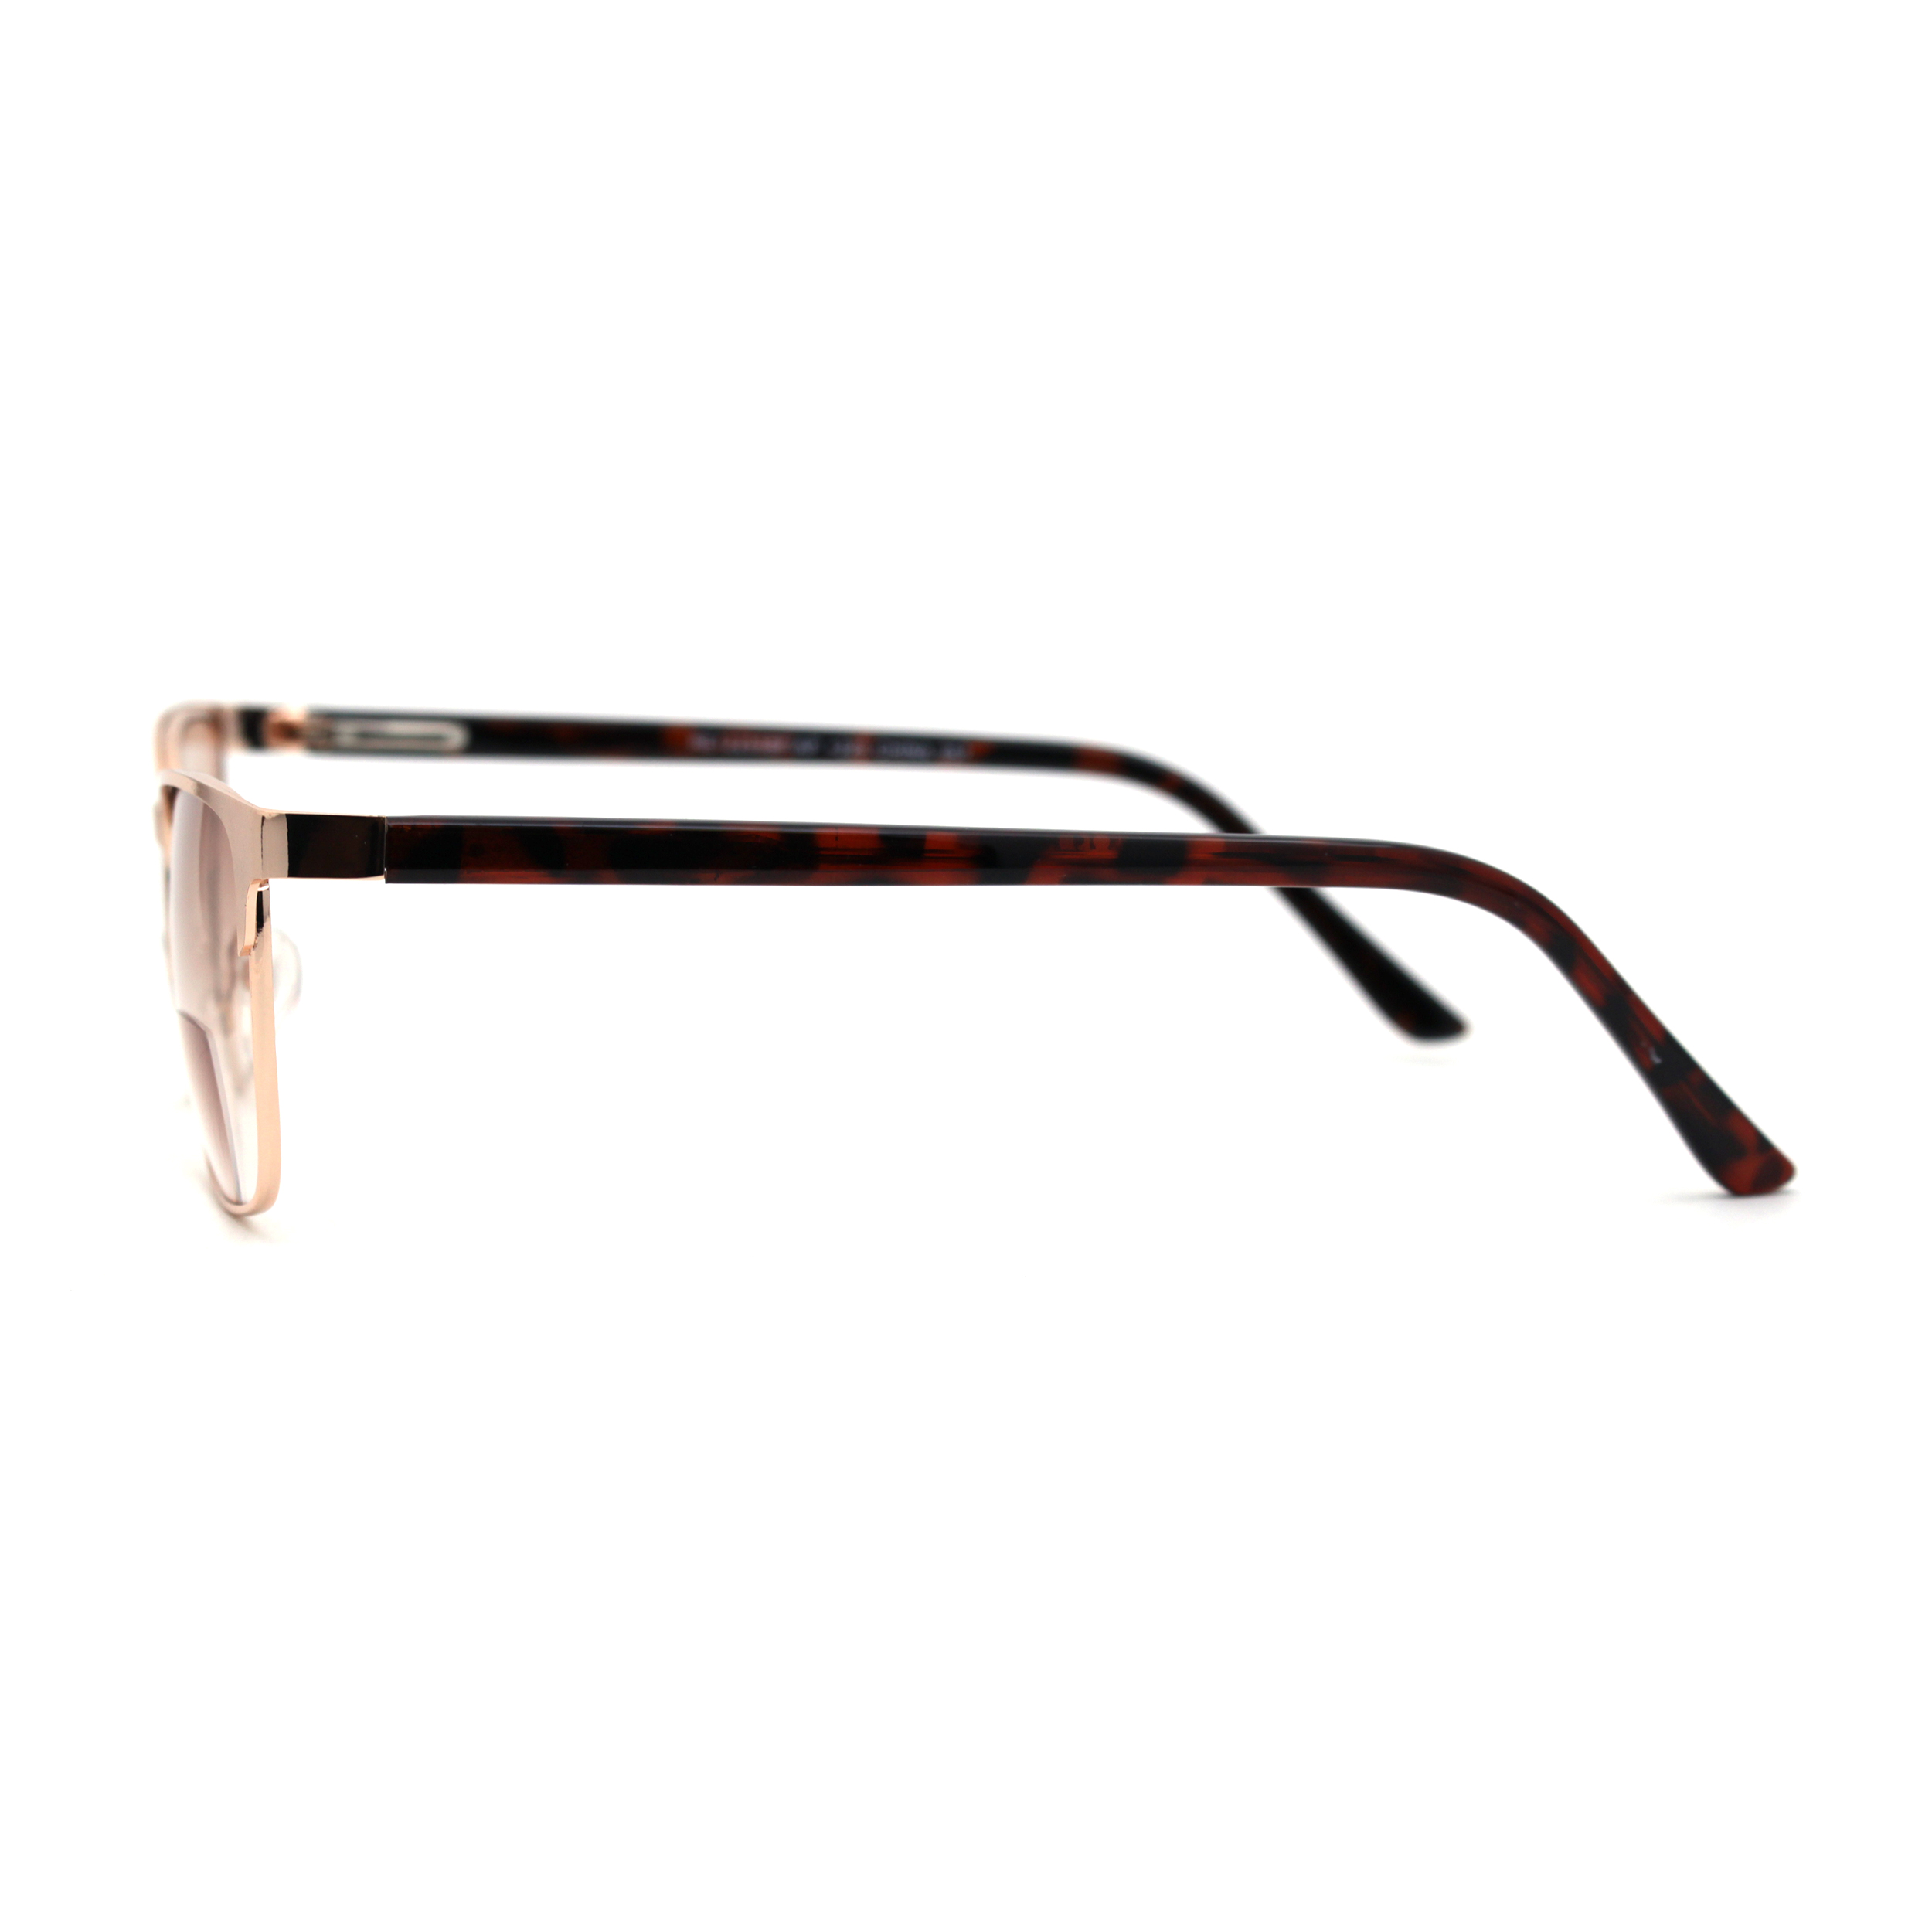 Mens Metal Half Rim Rectangular Bifocal Light Sunglasses Reader Gold +3.0 - image 3 of 4